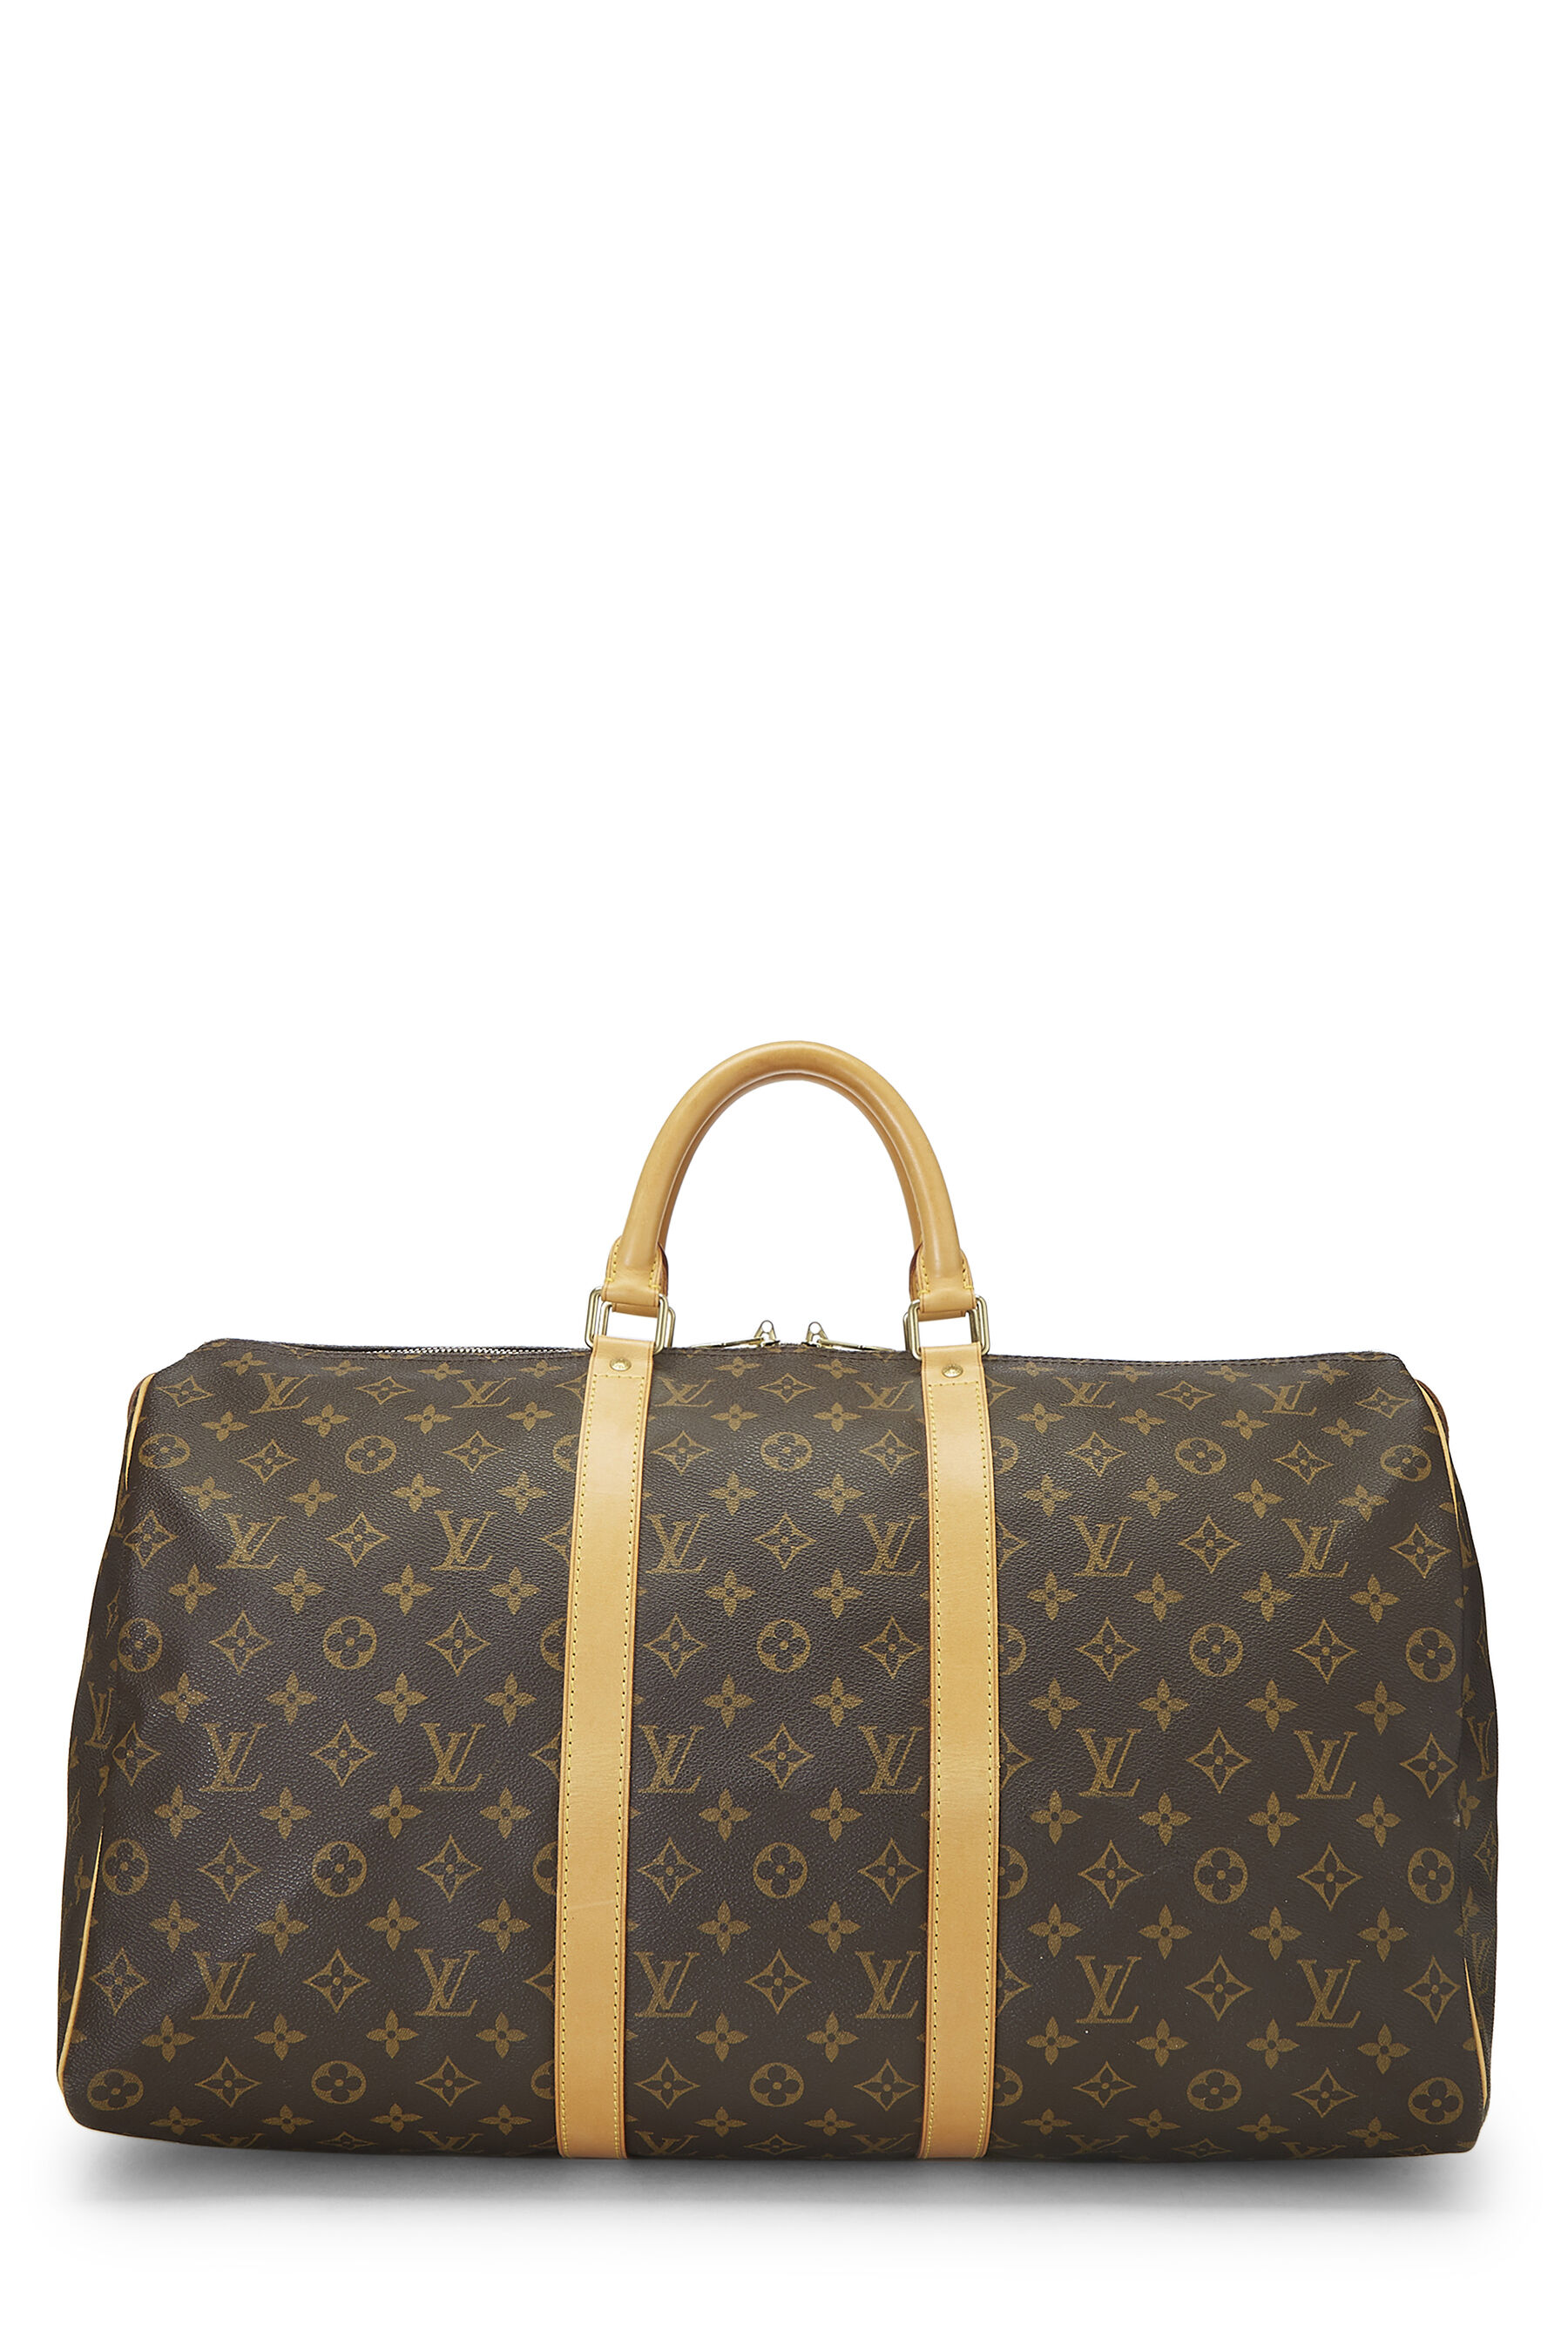 Louis Vuitton Keepall 50 bag - Gaja Refashion